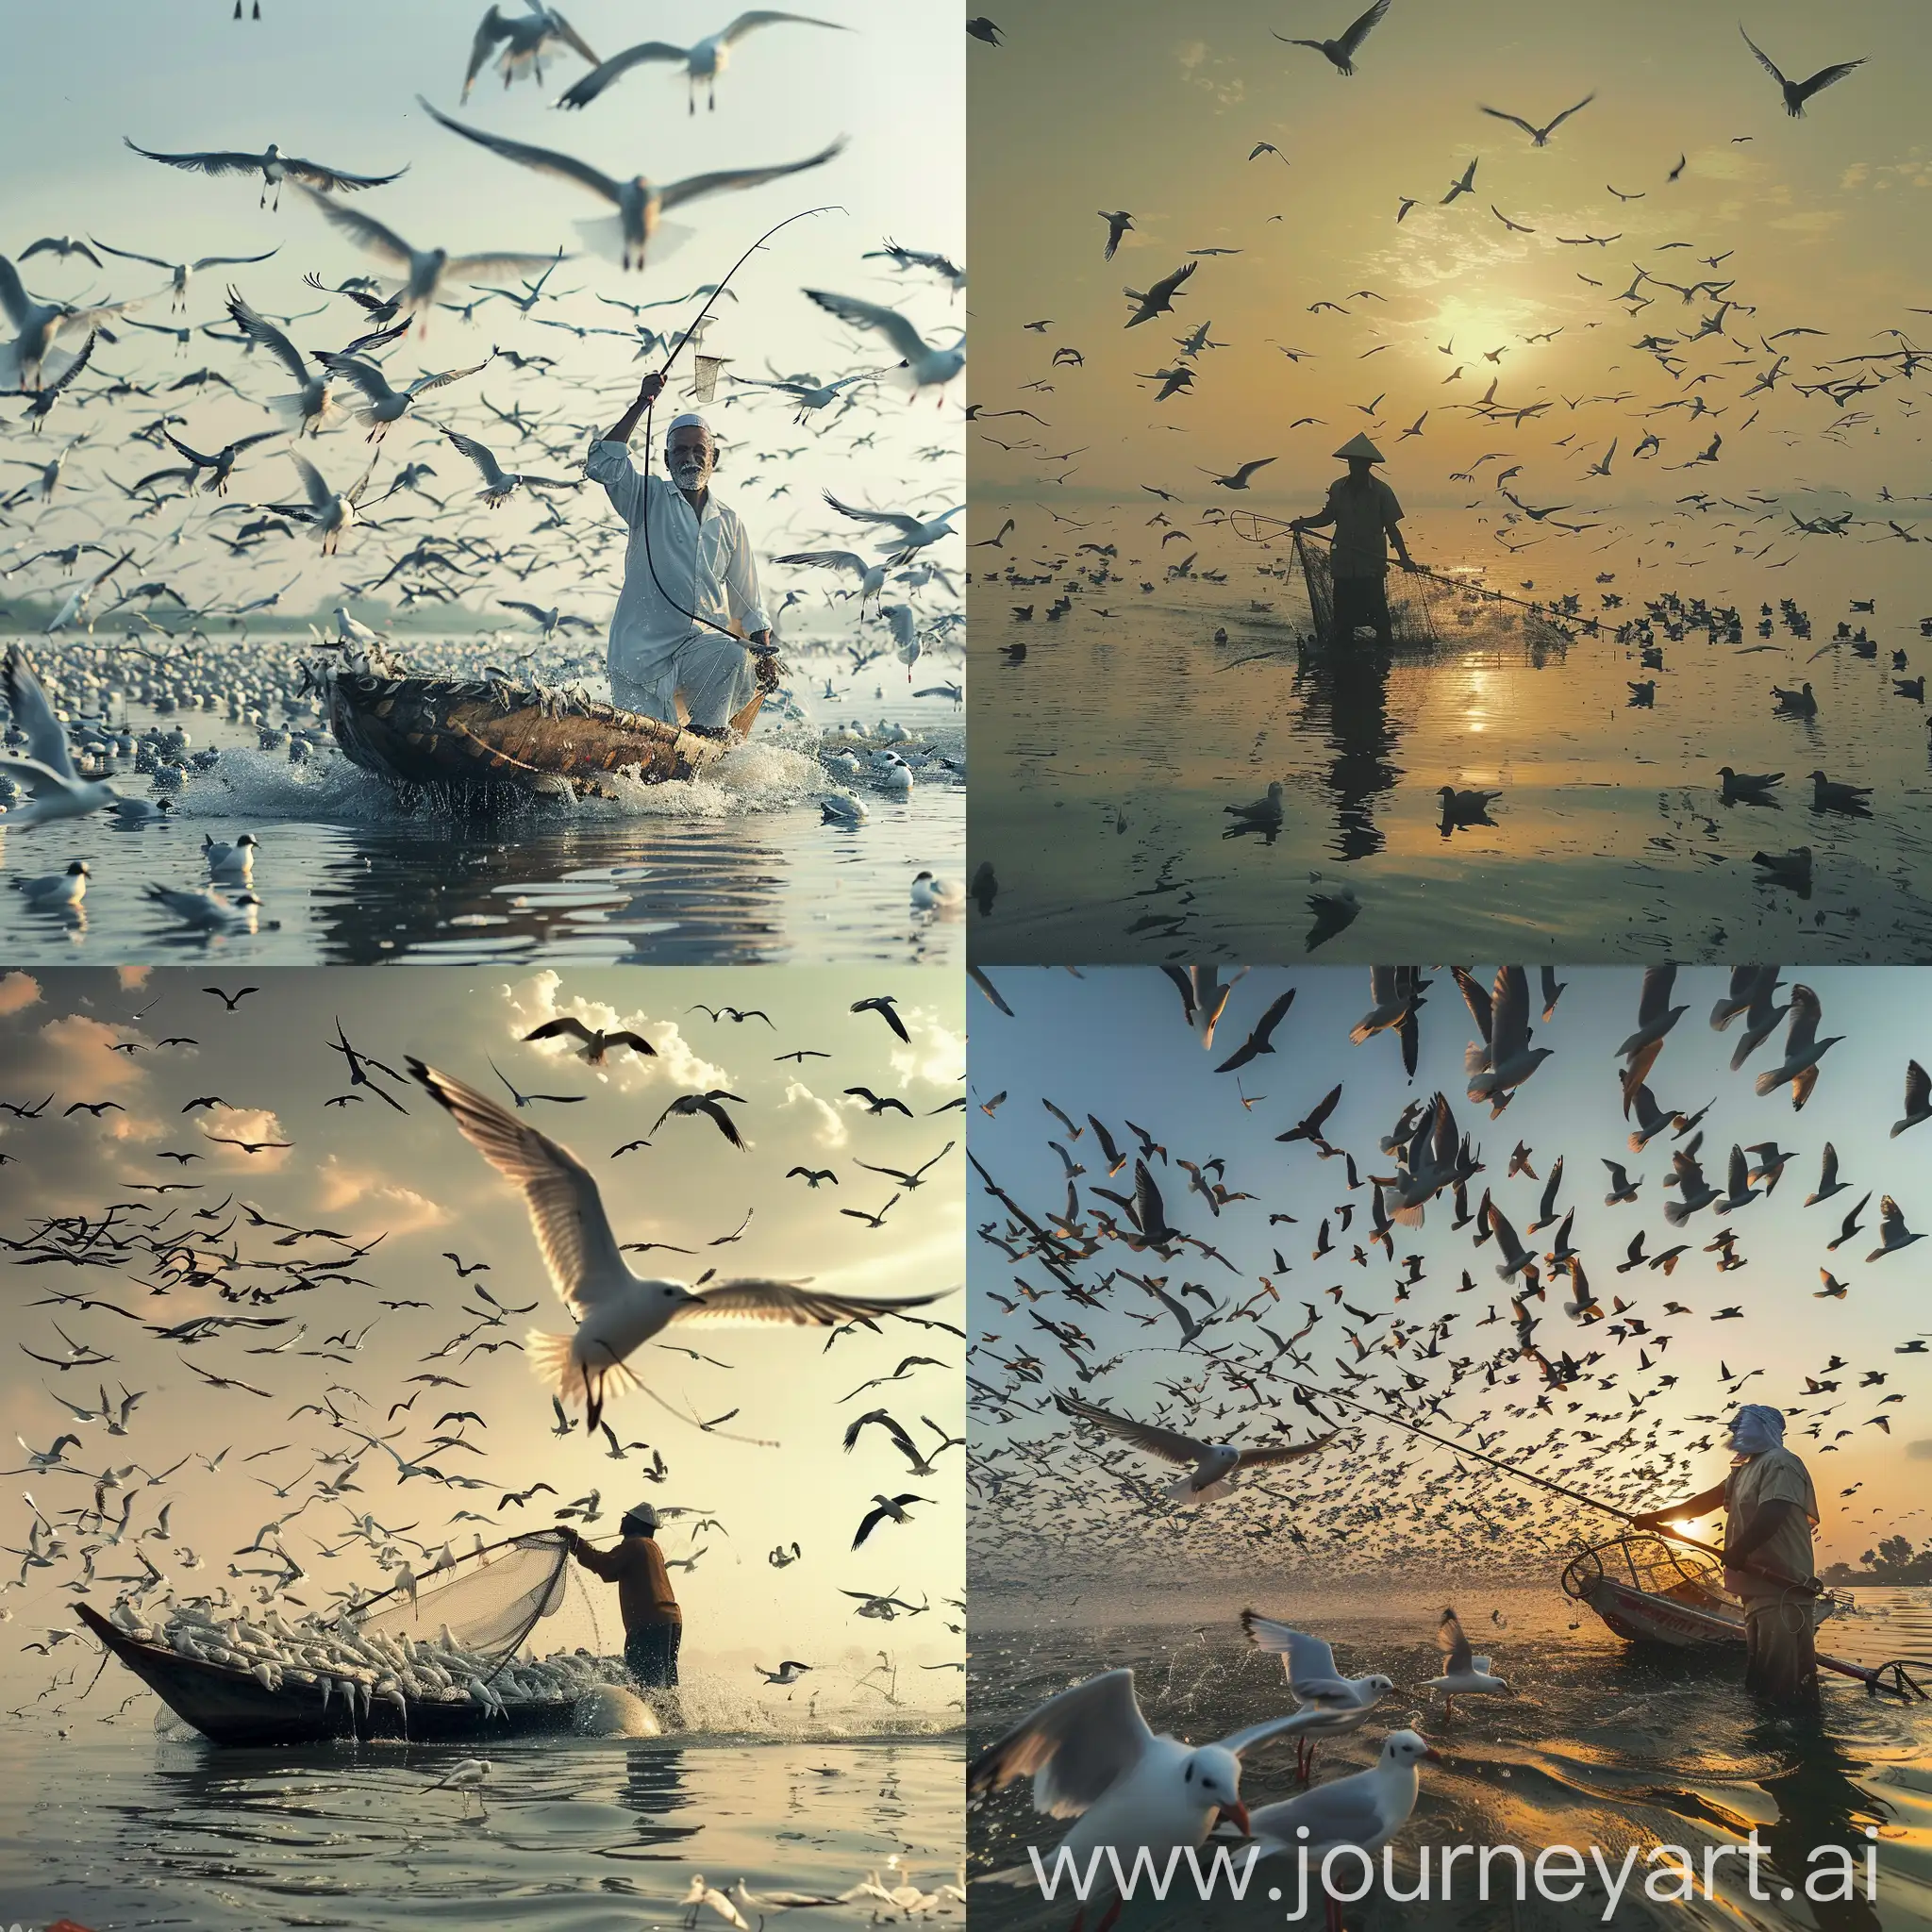 Coastal-Fisherman-and-Eccentric-Bird-Catcher-Surrounded-by-Myriad-Birds